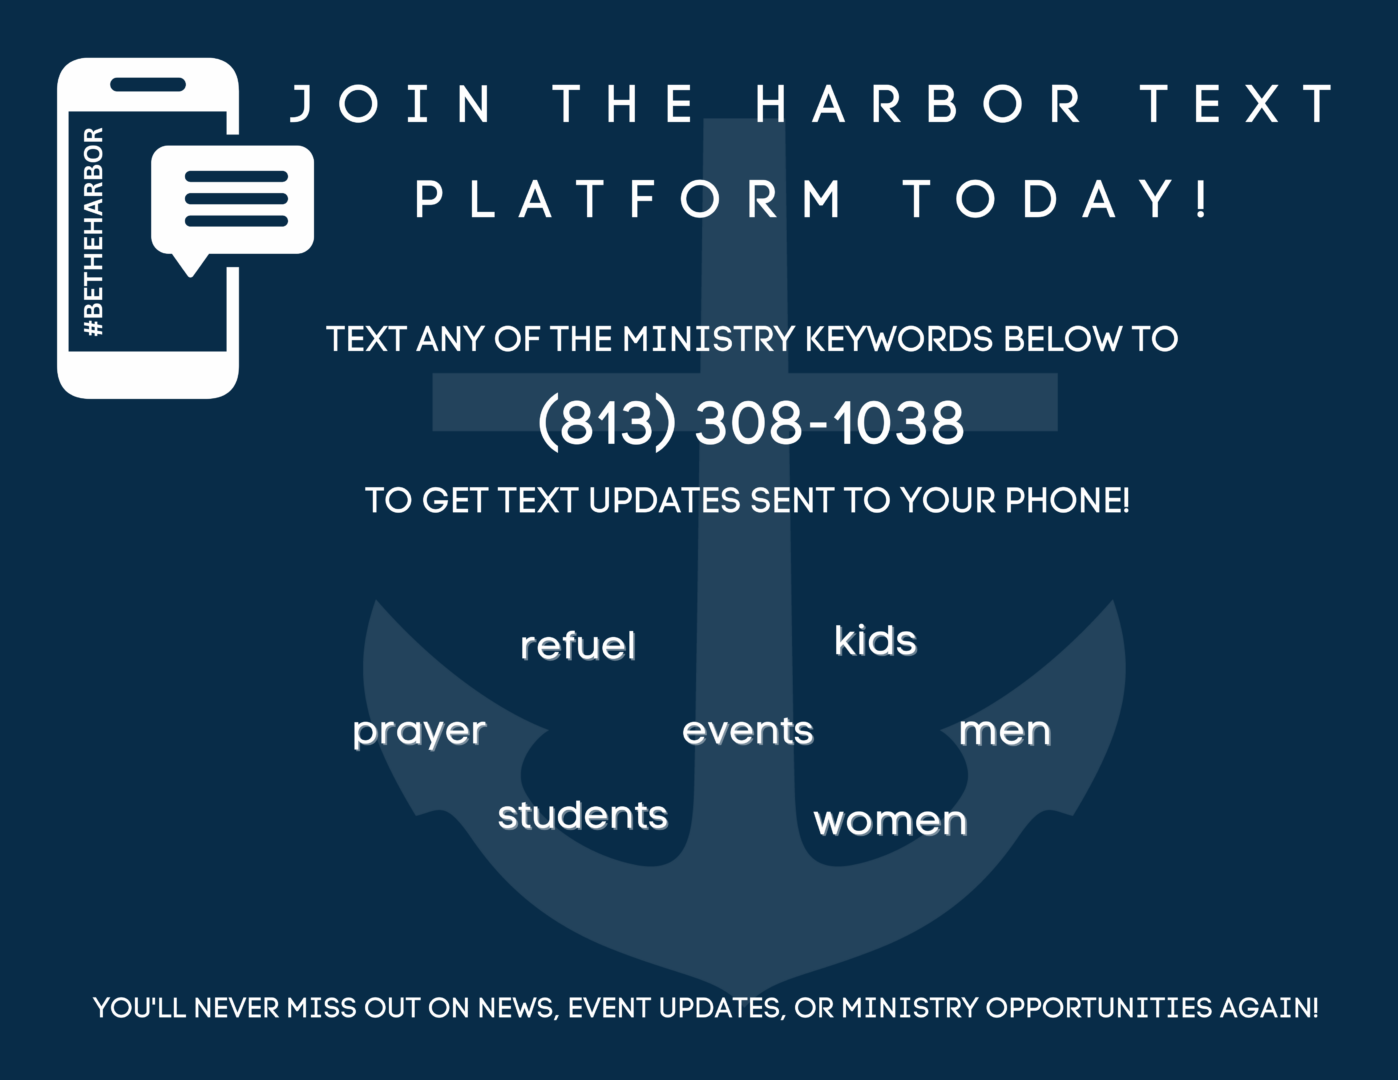 Text Message Updates Platform for the Harbor Church in Odessa, FL